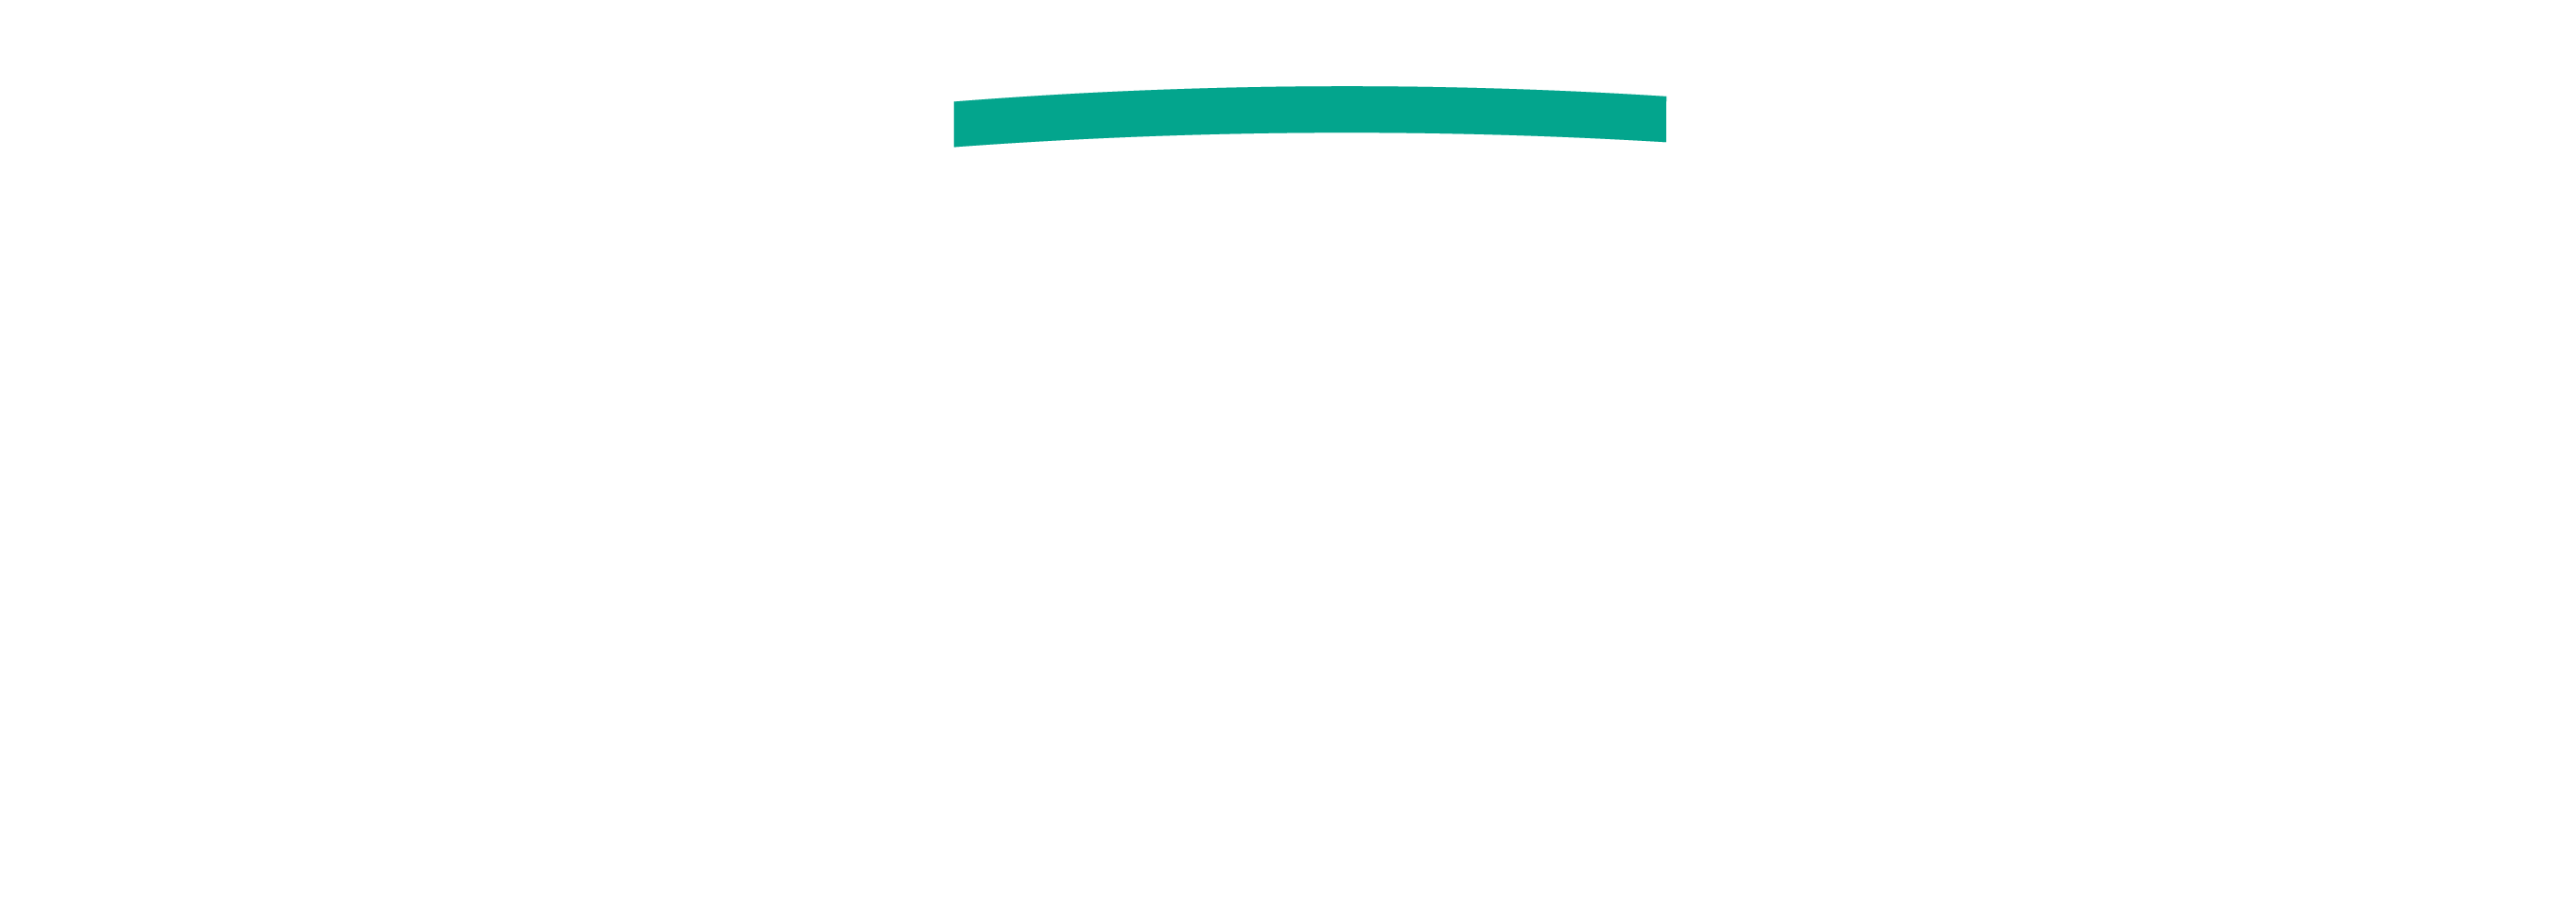 GAPR logo